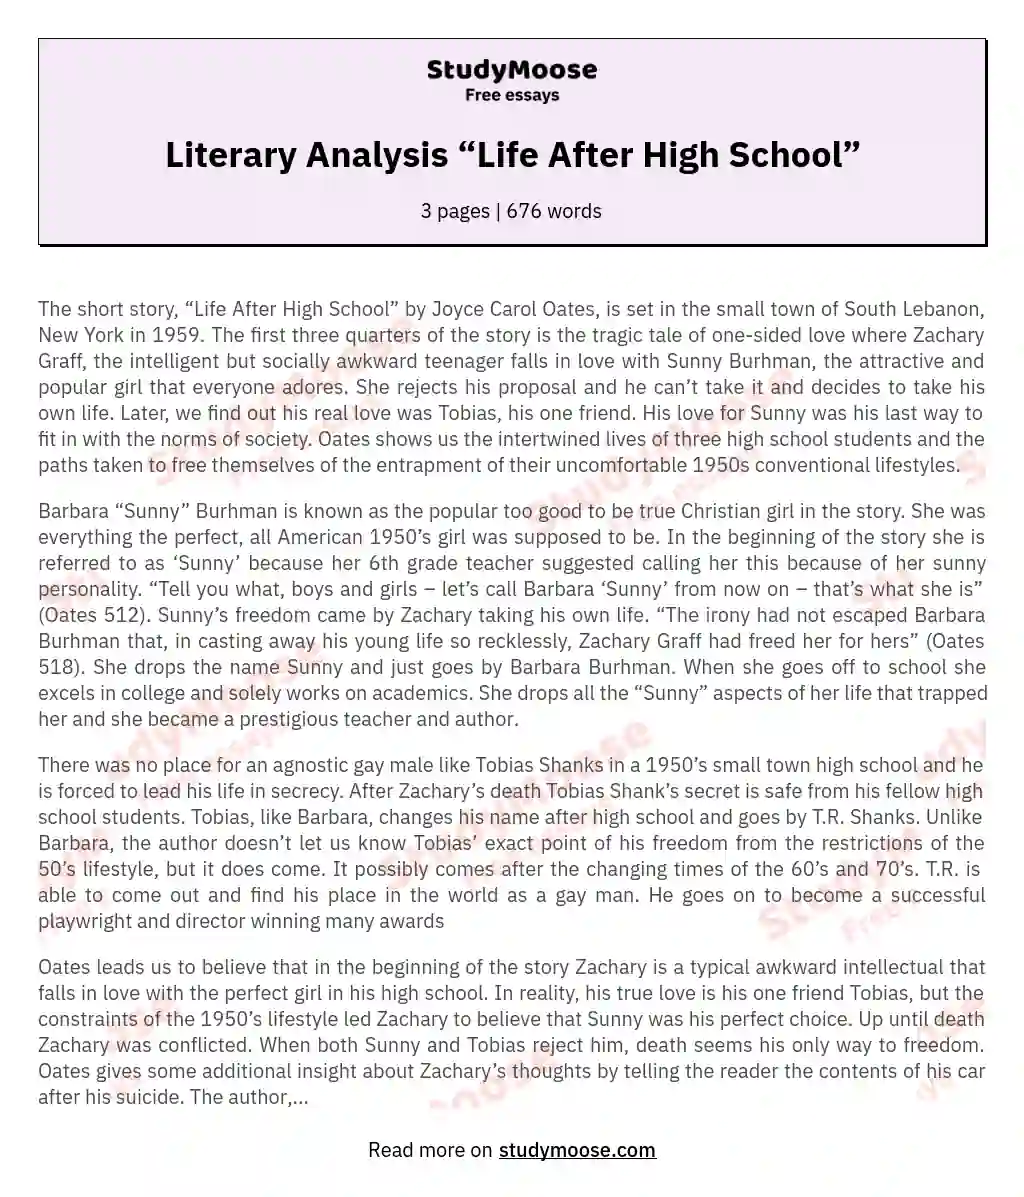 Literary Analysis “Life After High School” essay